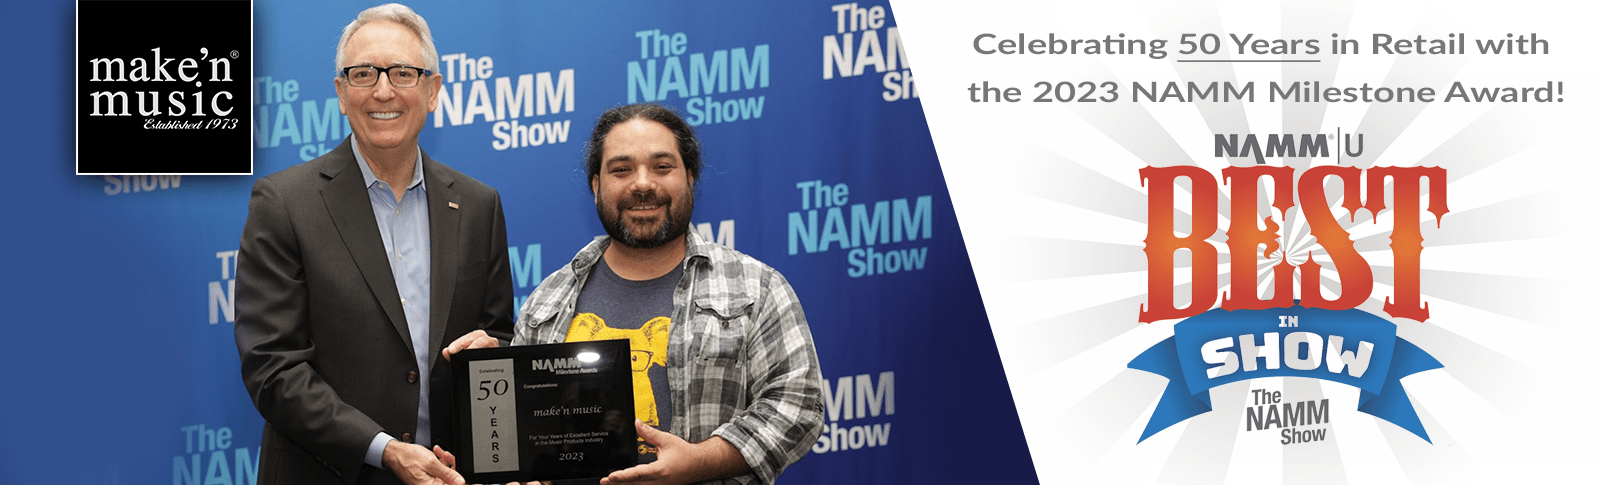 Make’n Music Celebrates 50 Years in Retail - NAMM Show Milestone Award